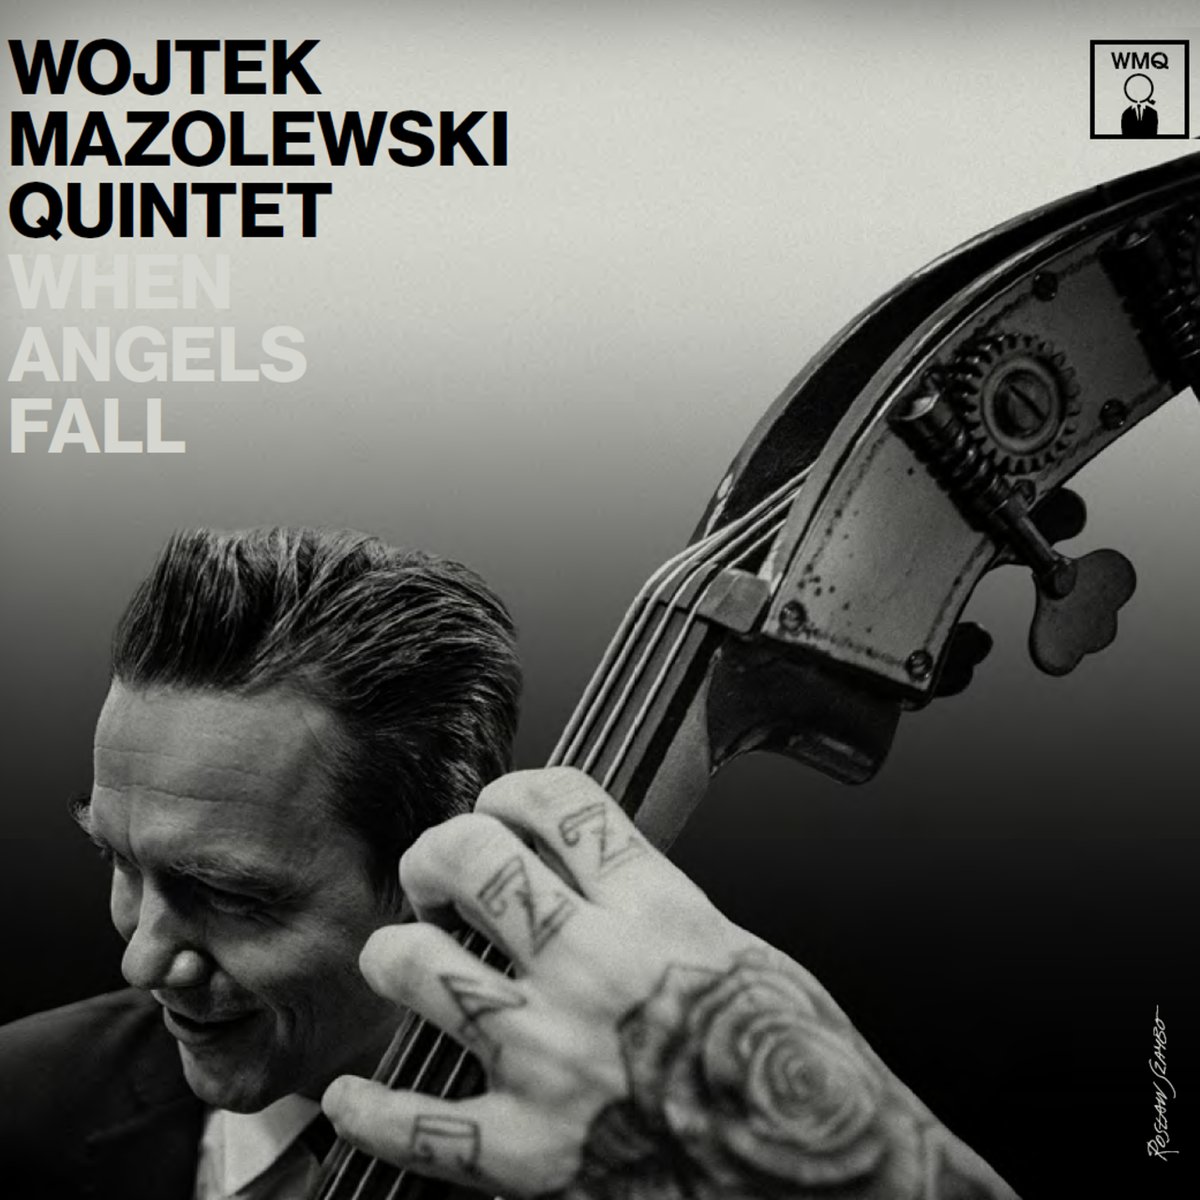 Wojtek Mazolewski Quintet "When Angels Fall"